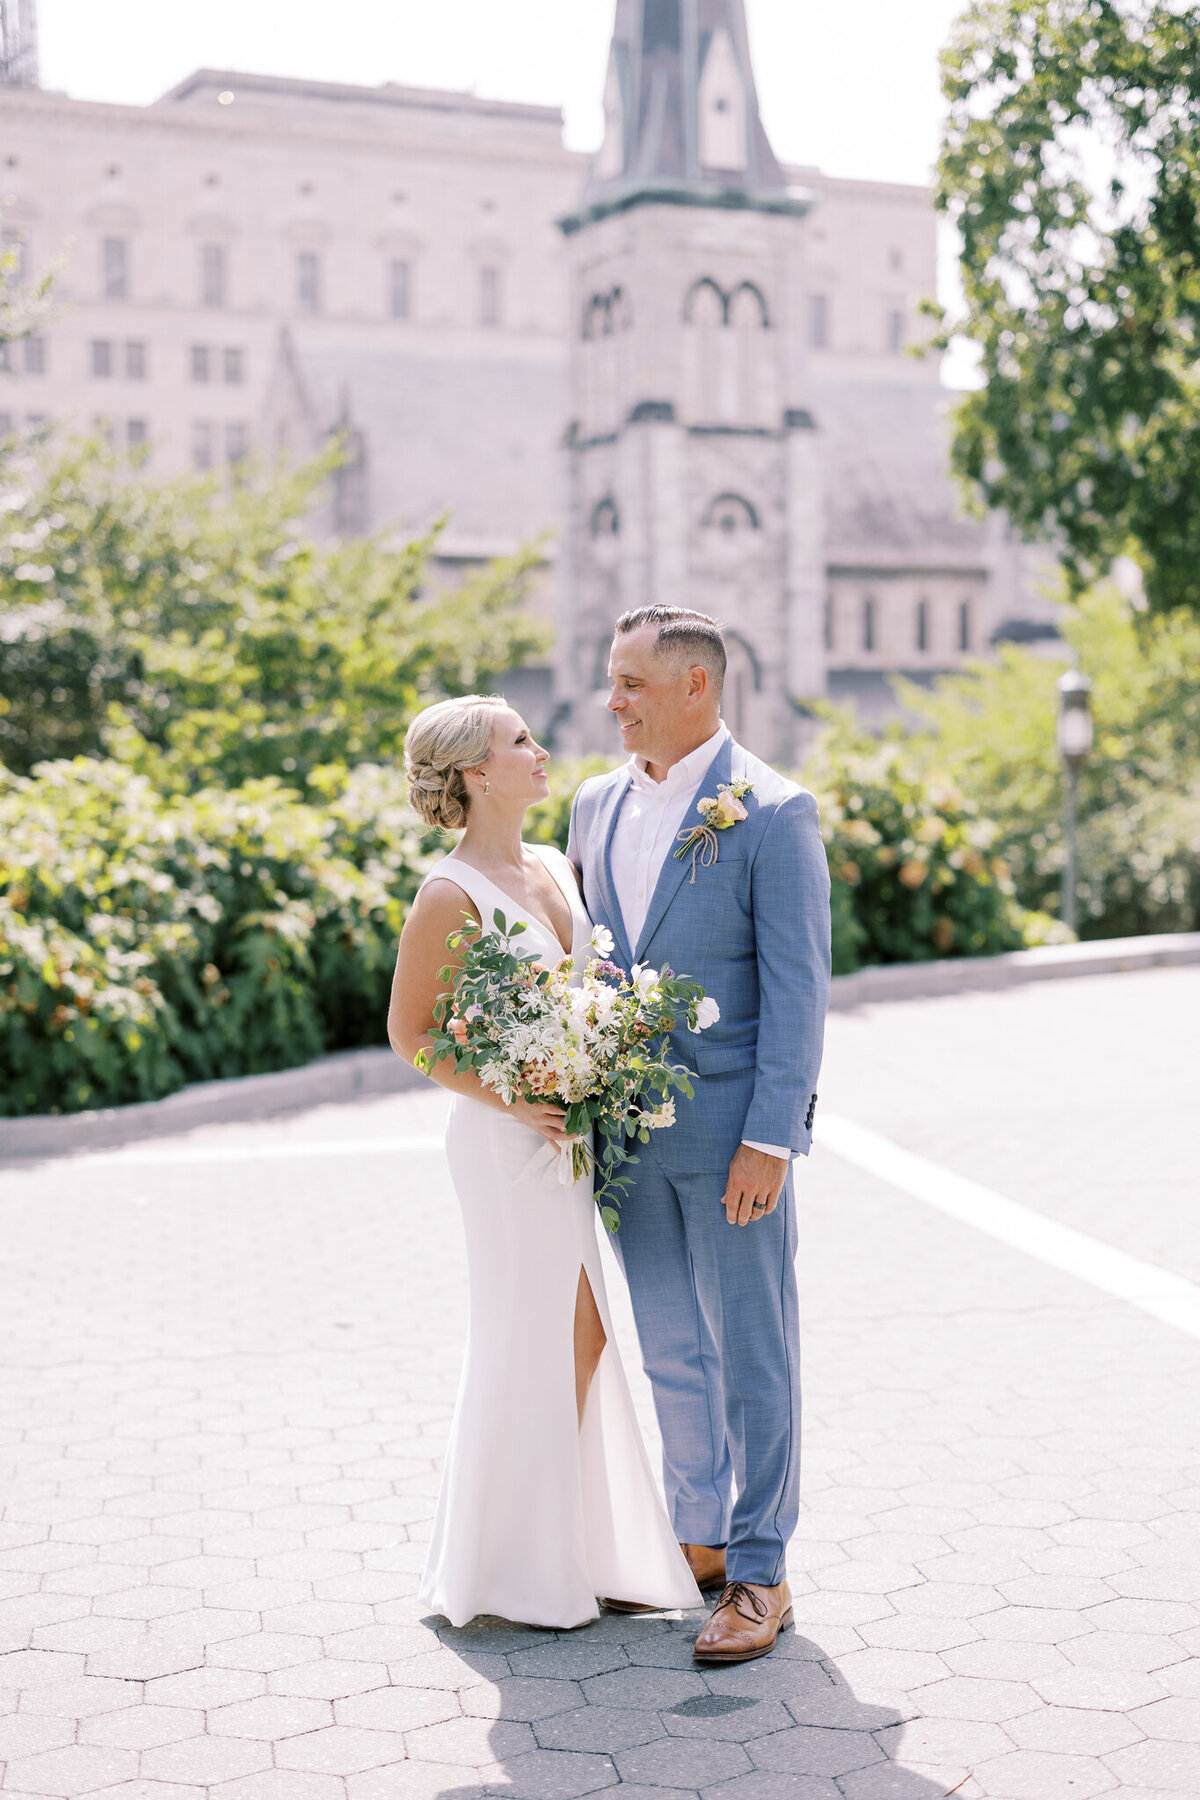 Courthouse Ceremony Wedding in PA | Ashlee Zimmerman